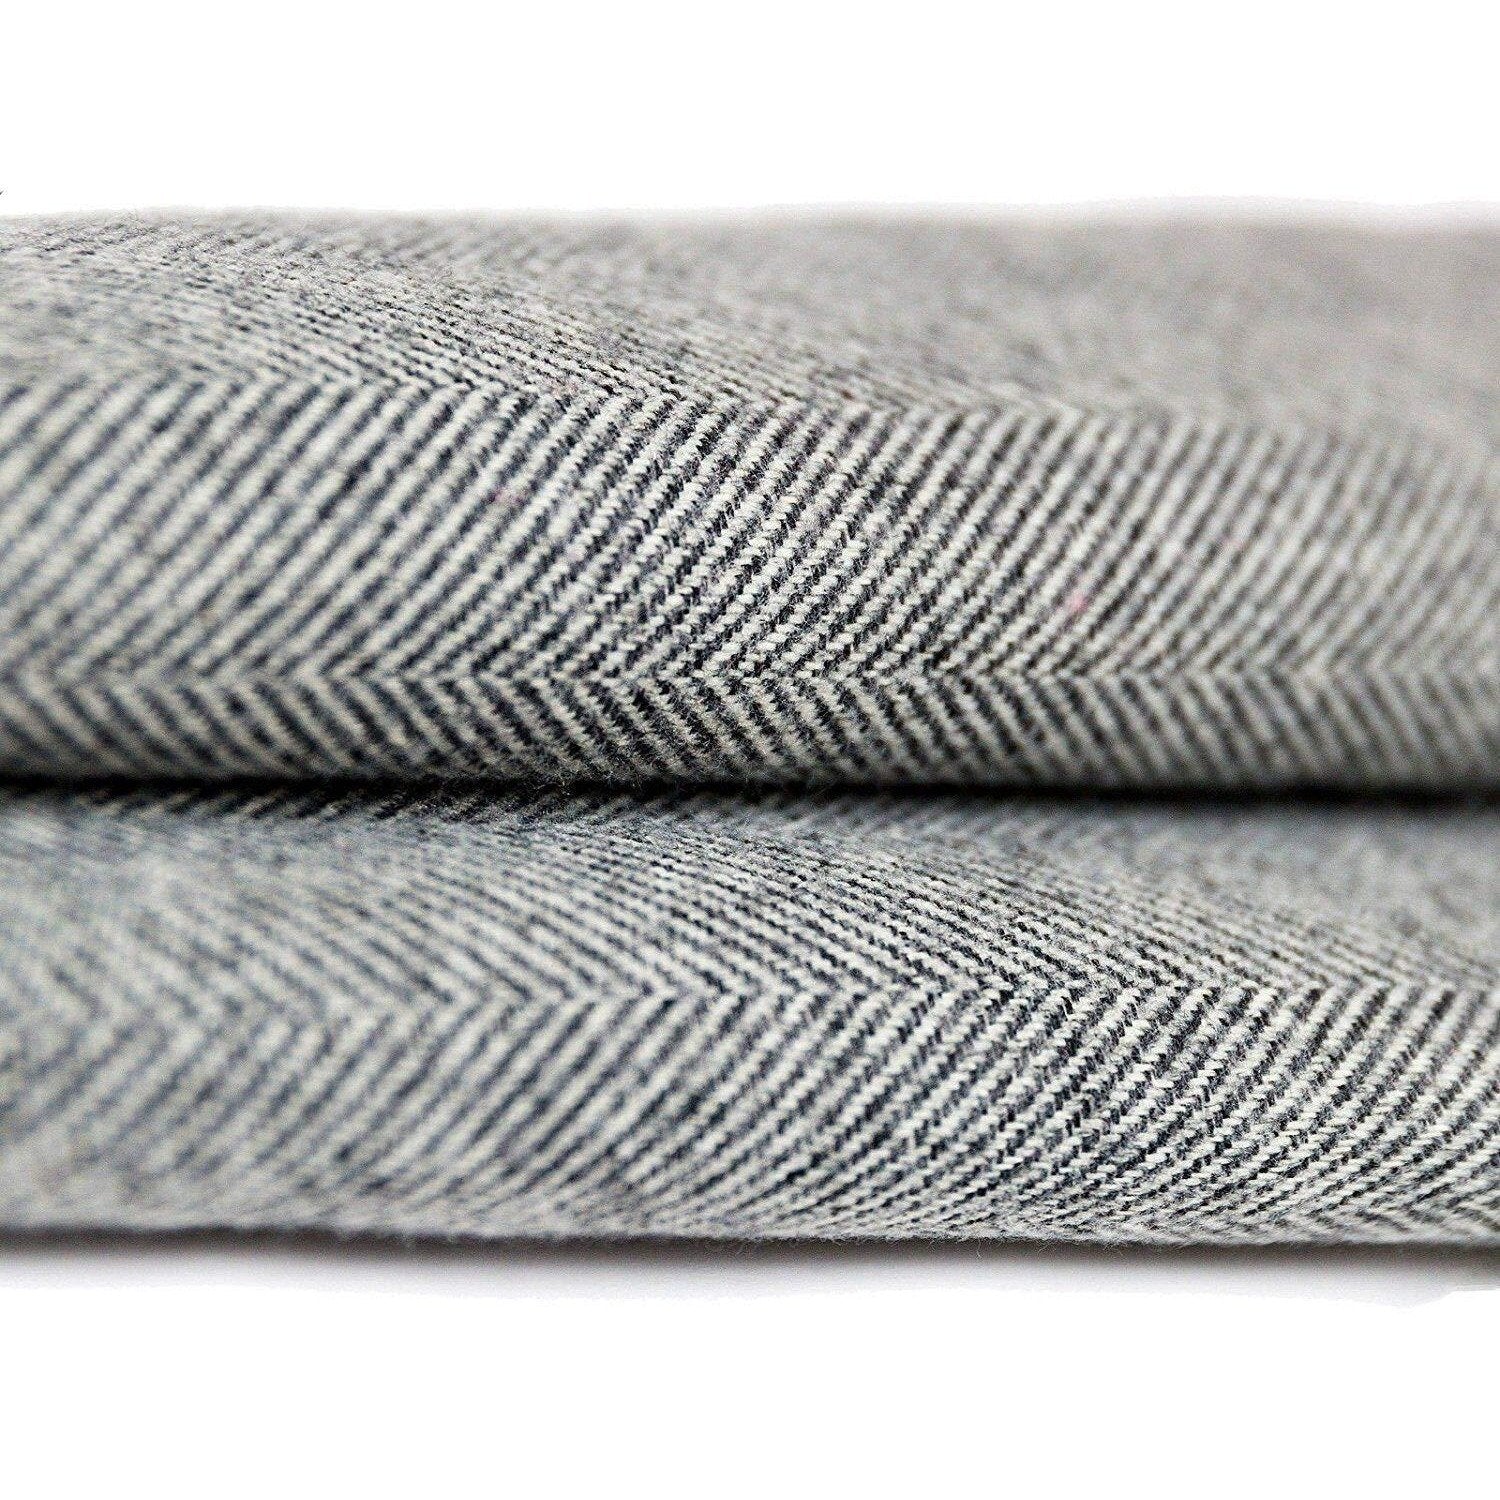 McAlister Textiles Deluxe Herringbone Grey + Yellow Box Cushion 43cm x 43cm x 3cm Box Cushions 